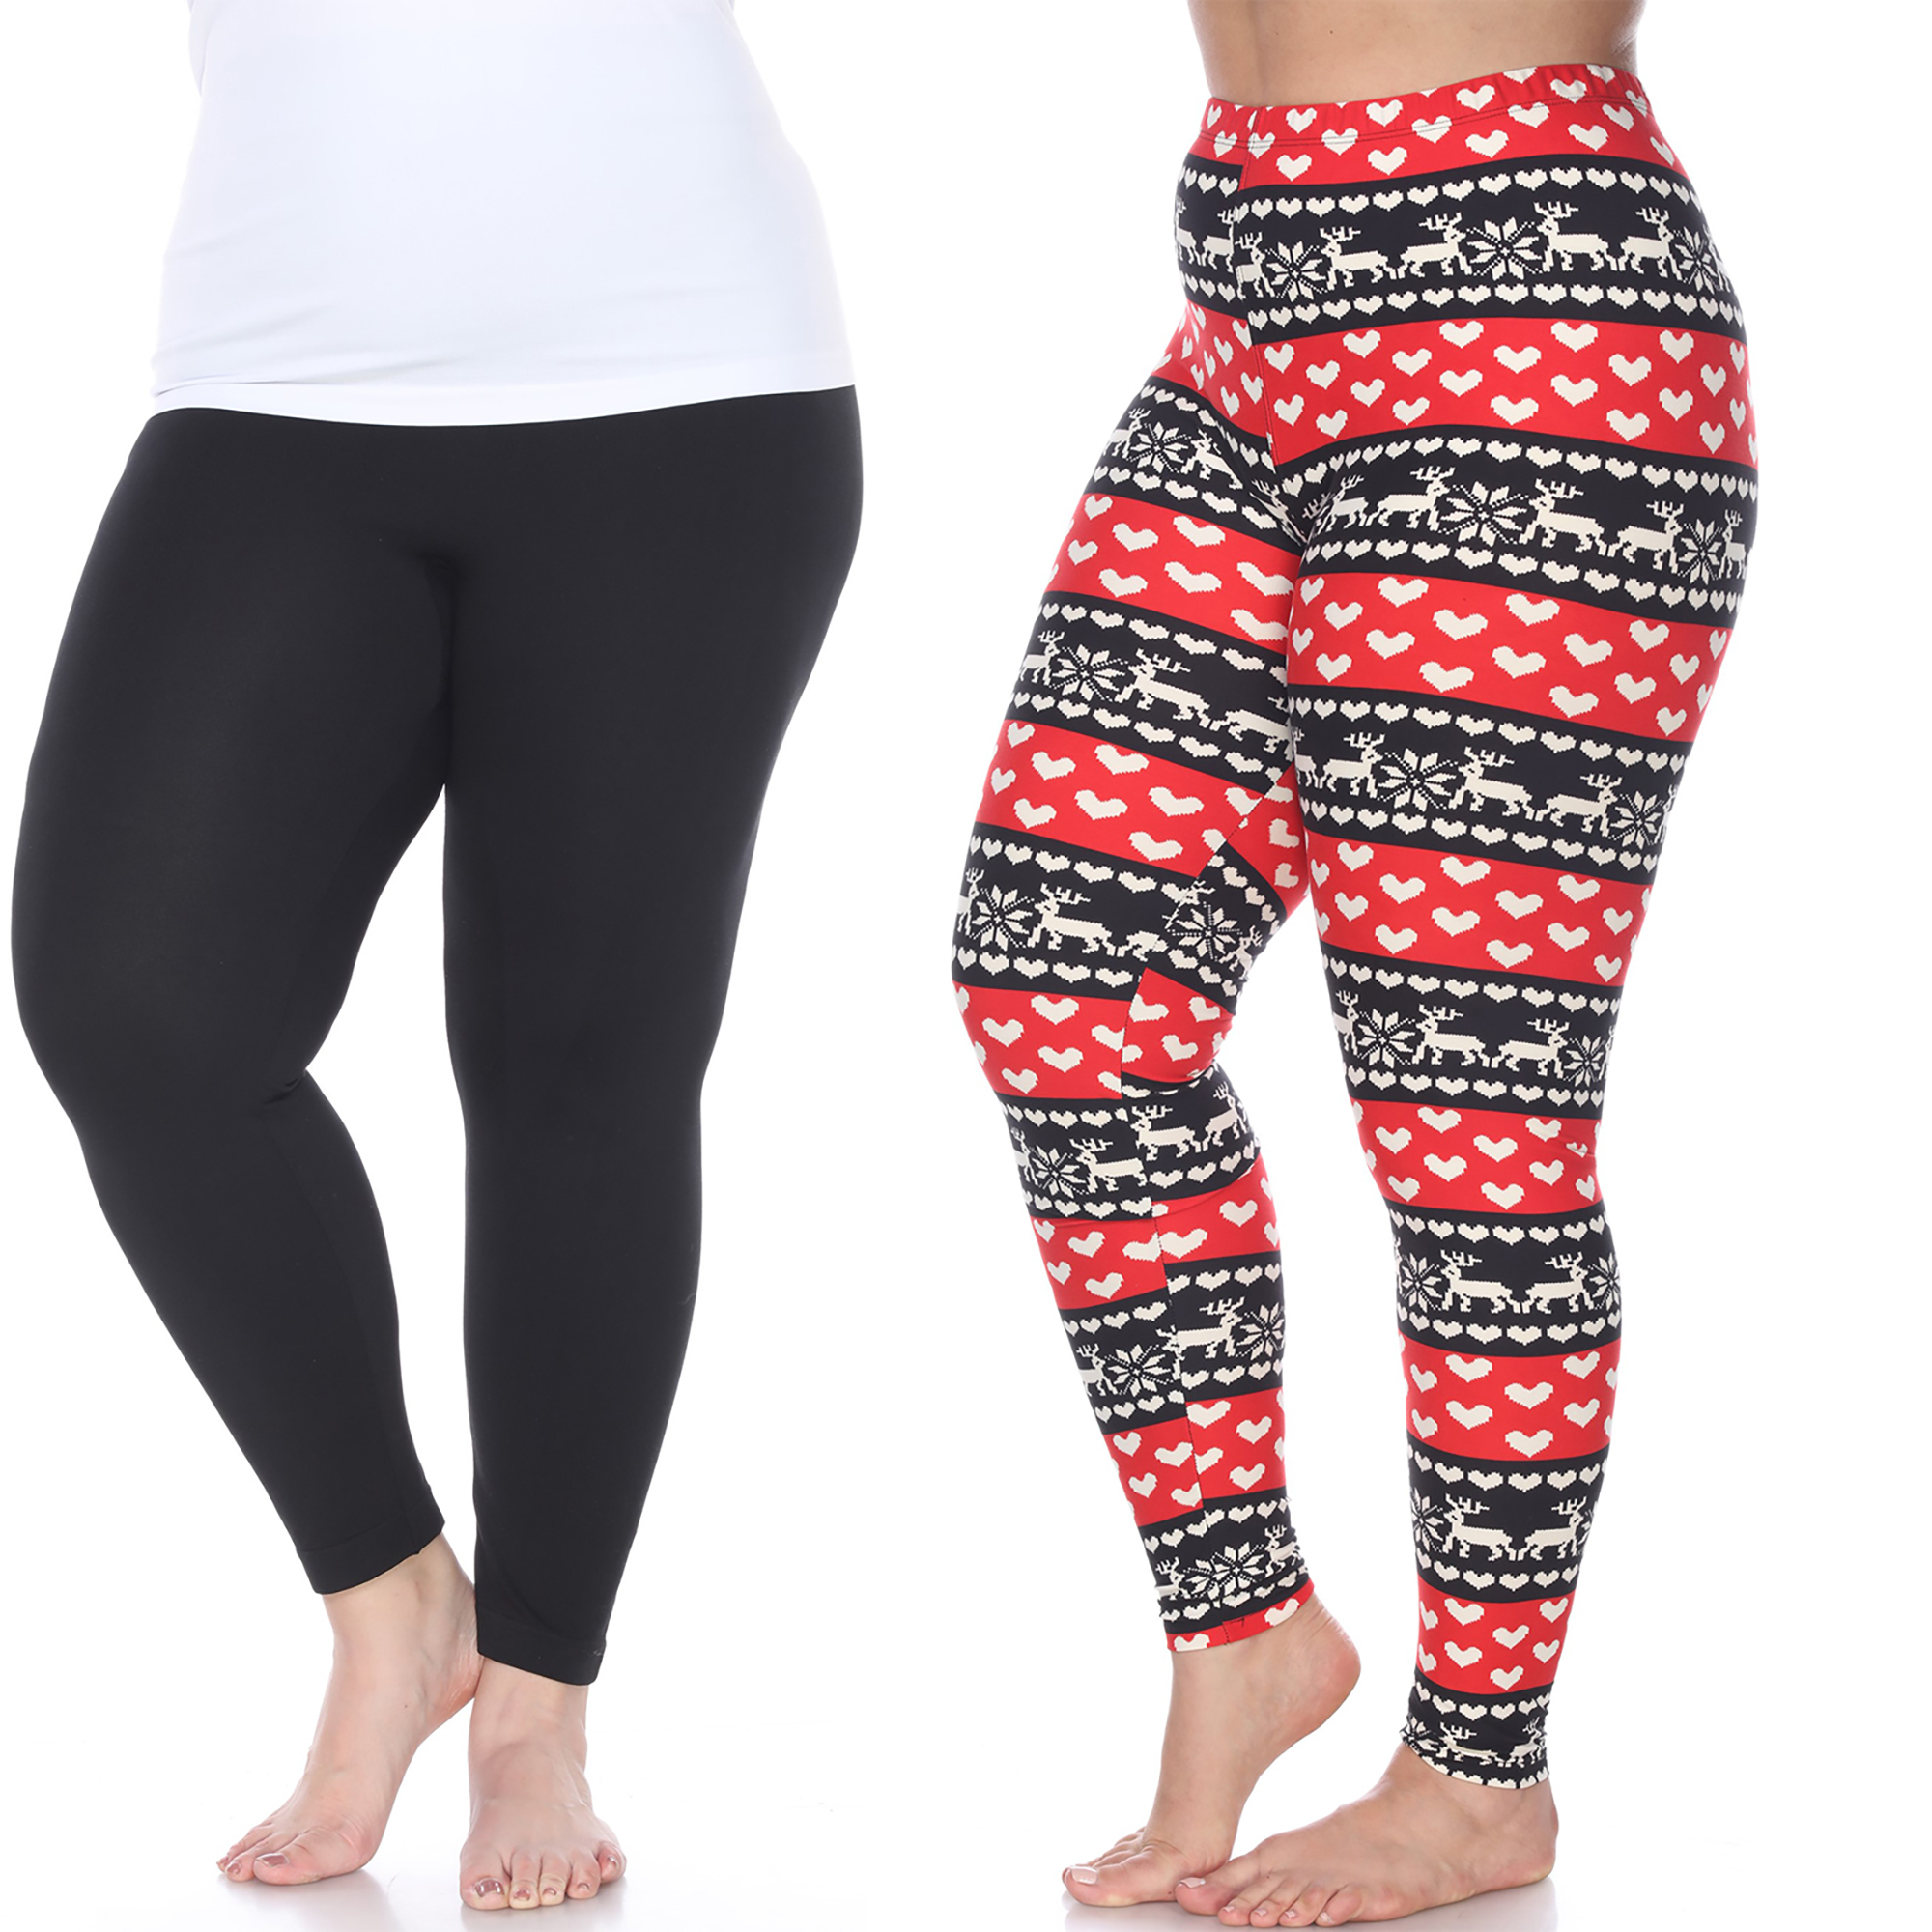 White Mark Women's Pack Of 2 Holiday Leggings - Black, Black/Red/Wht, One Size - Plus